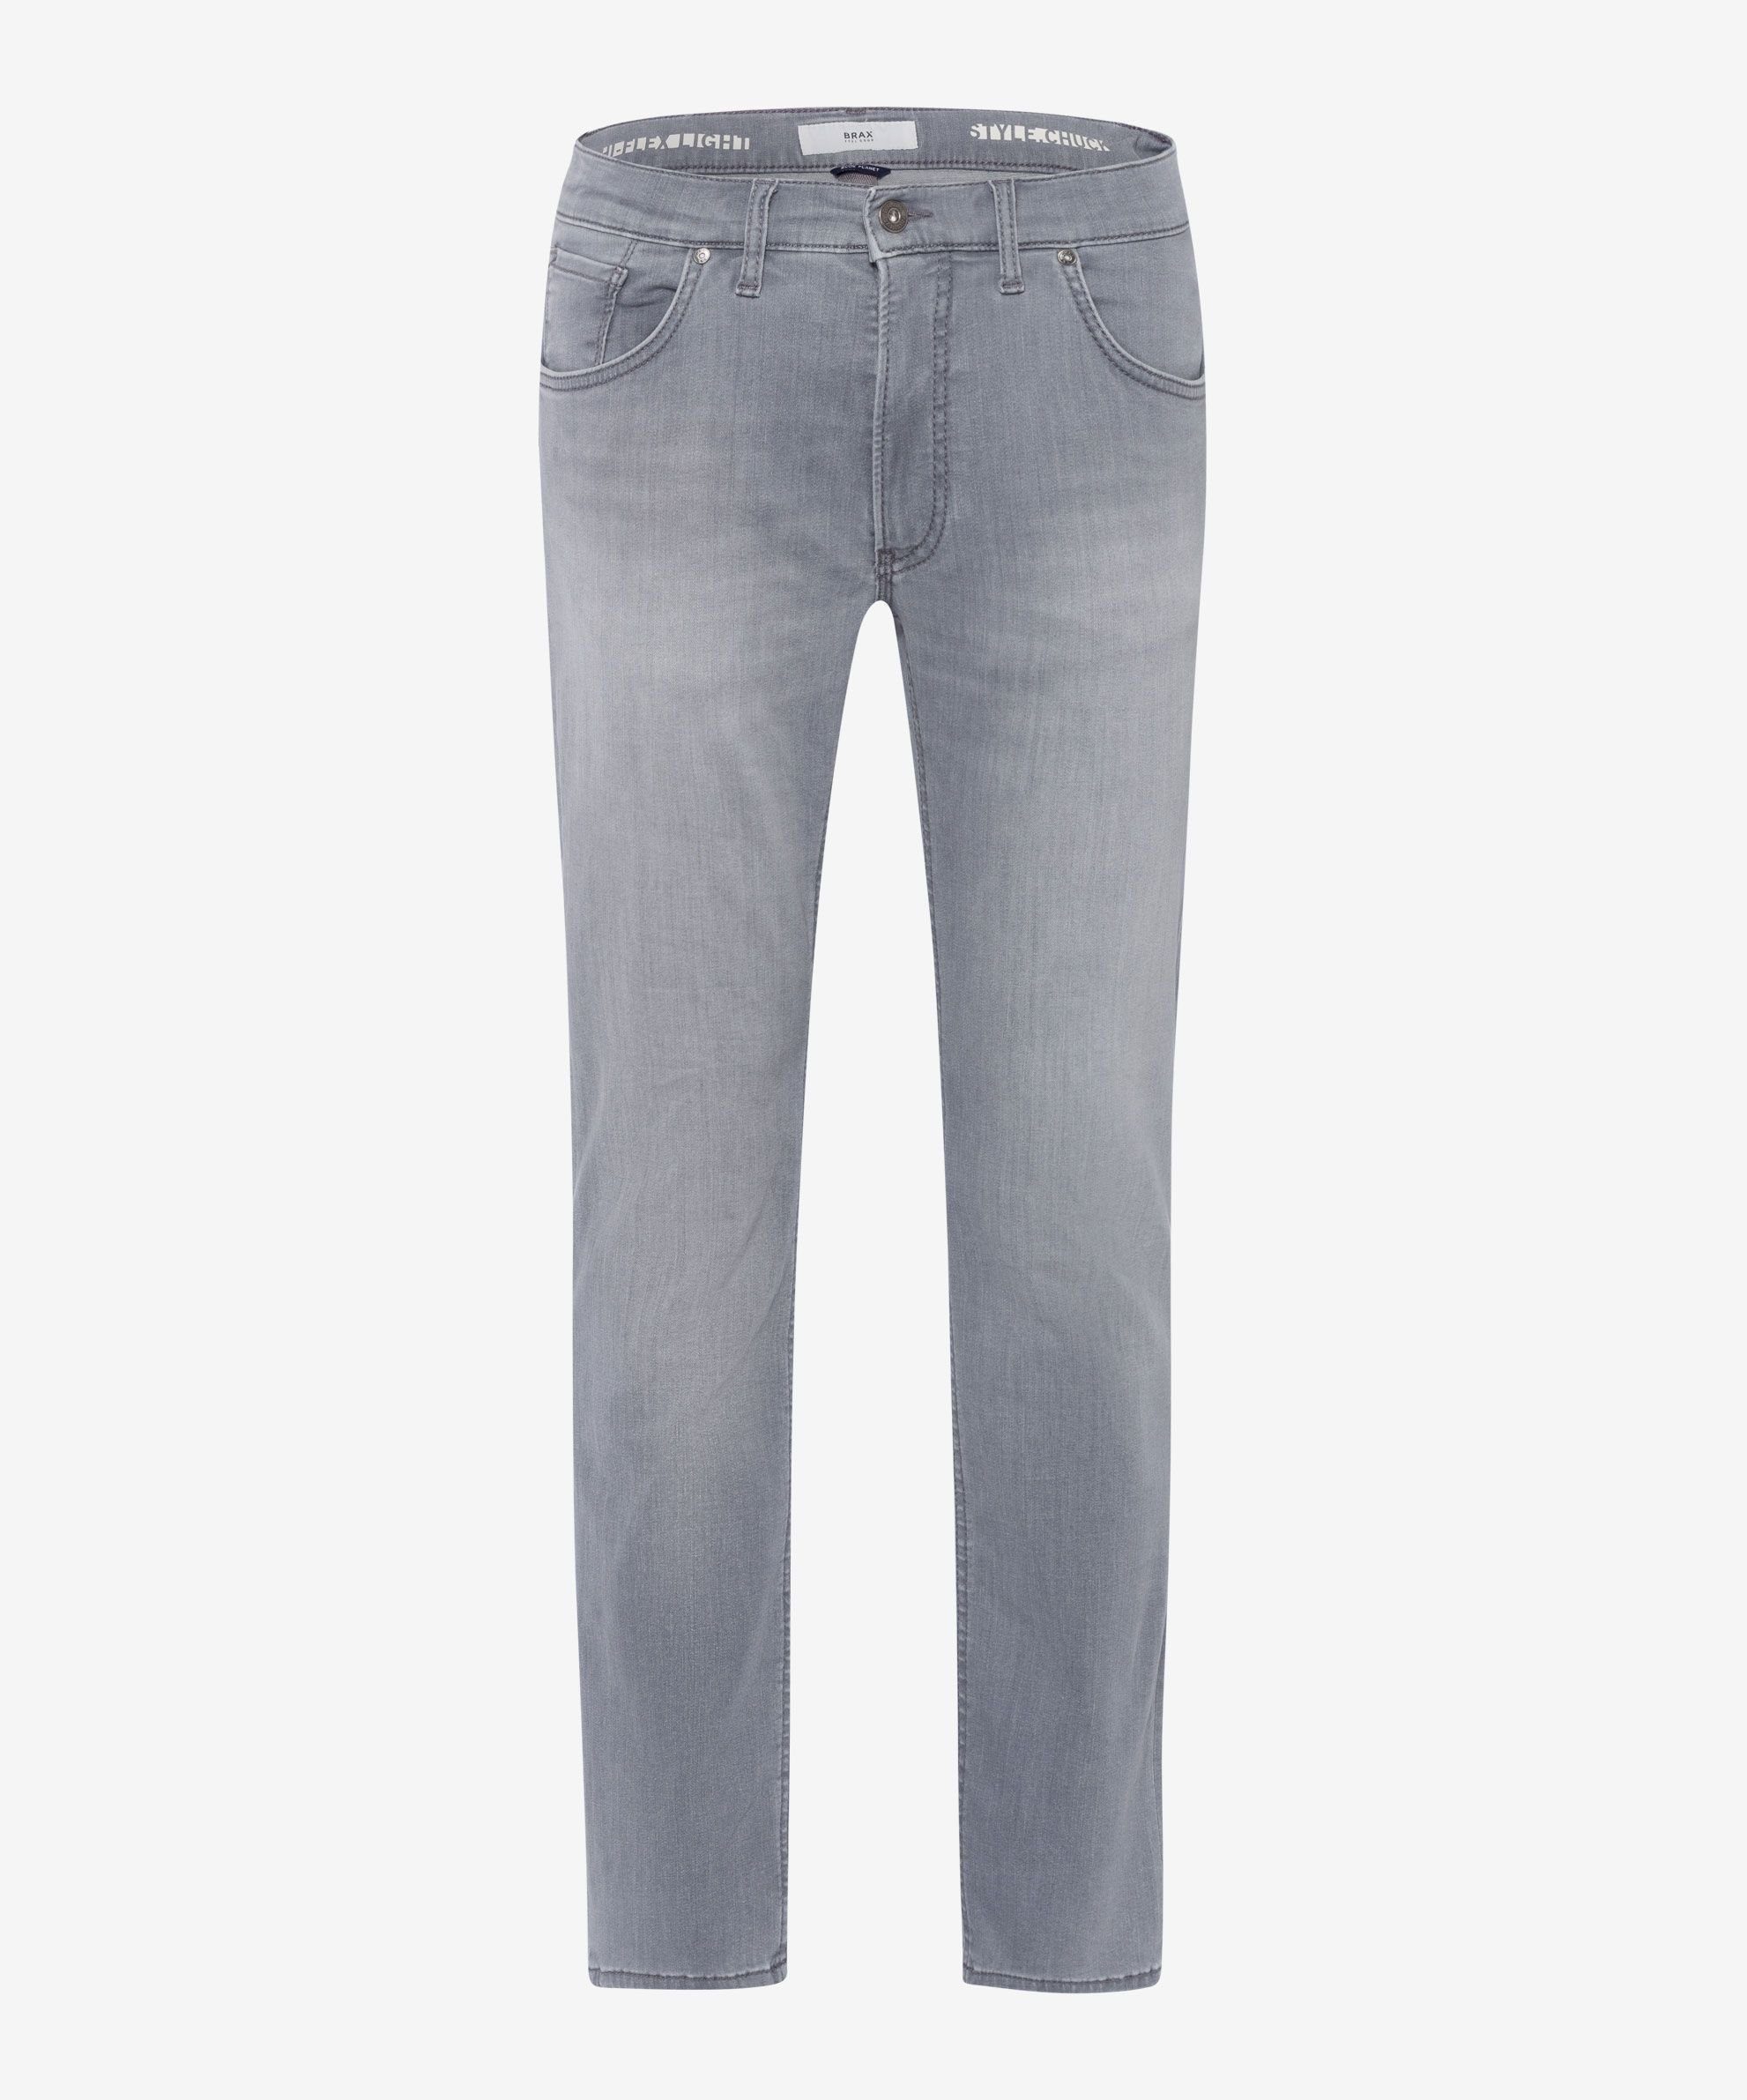 Brax 5-Pocket-Jeans grey used